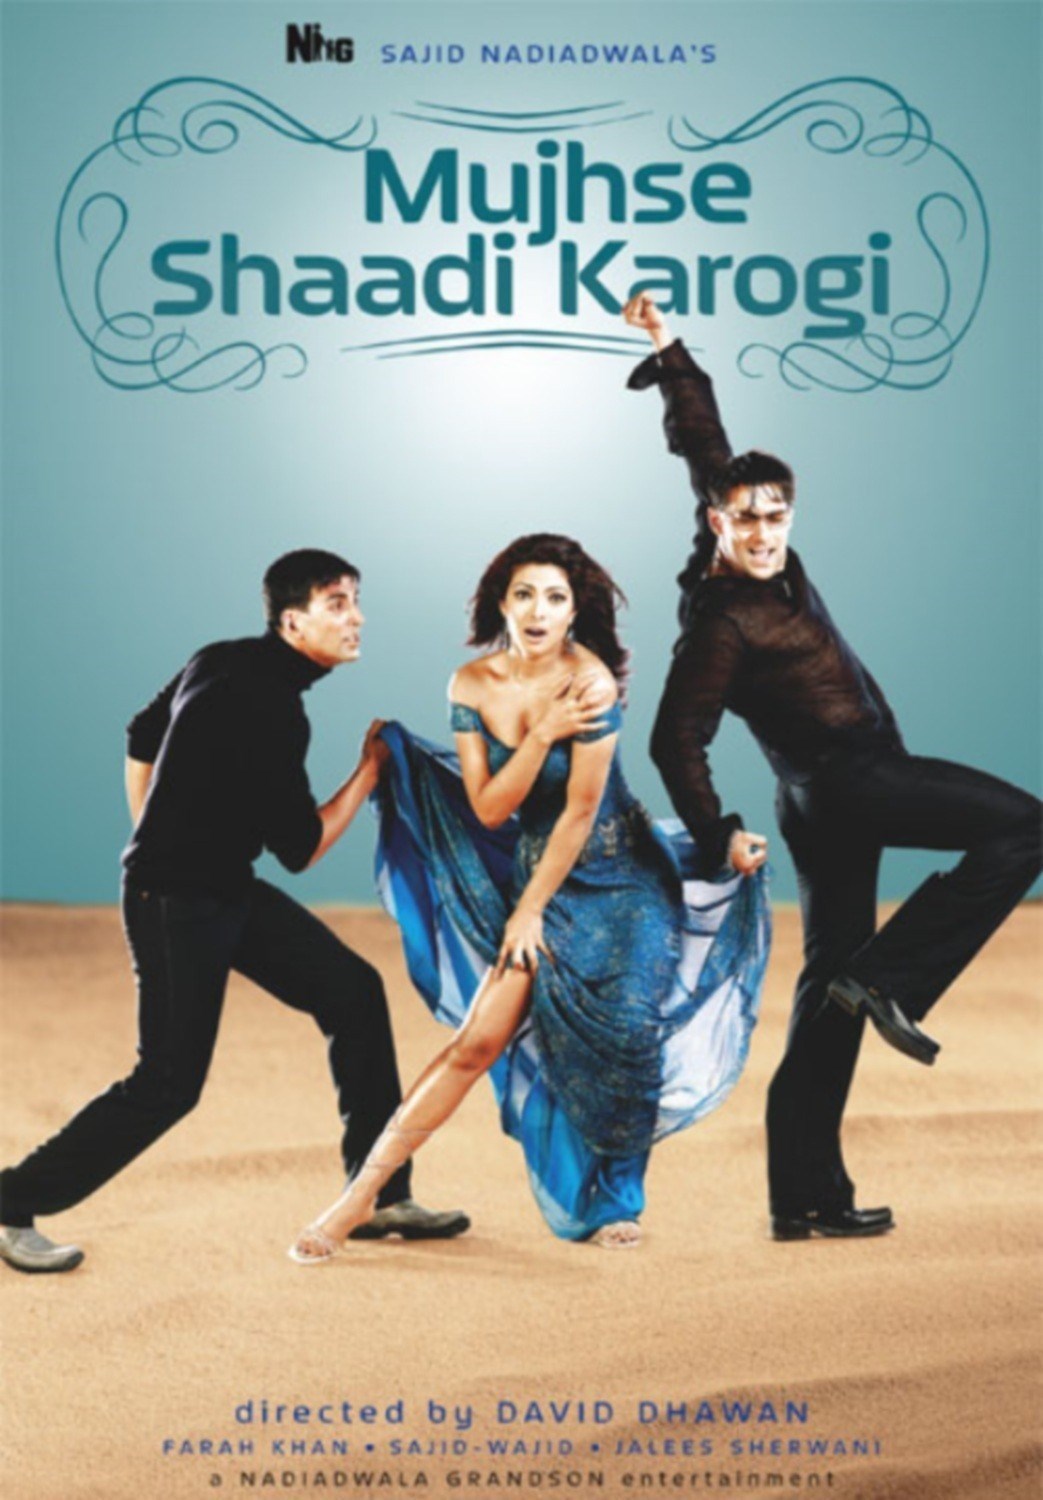 FULL MOVIE: Mujhse Shaadi Karogi (2004)